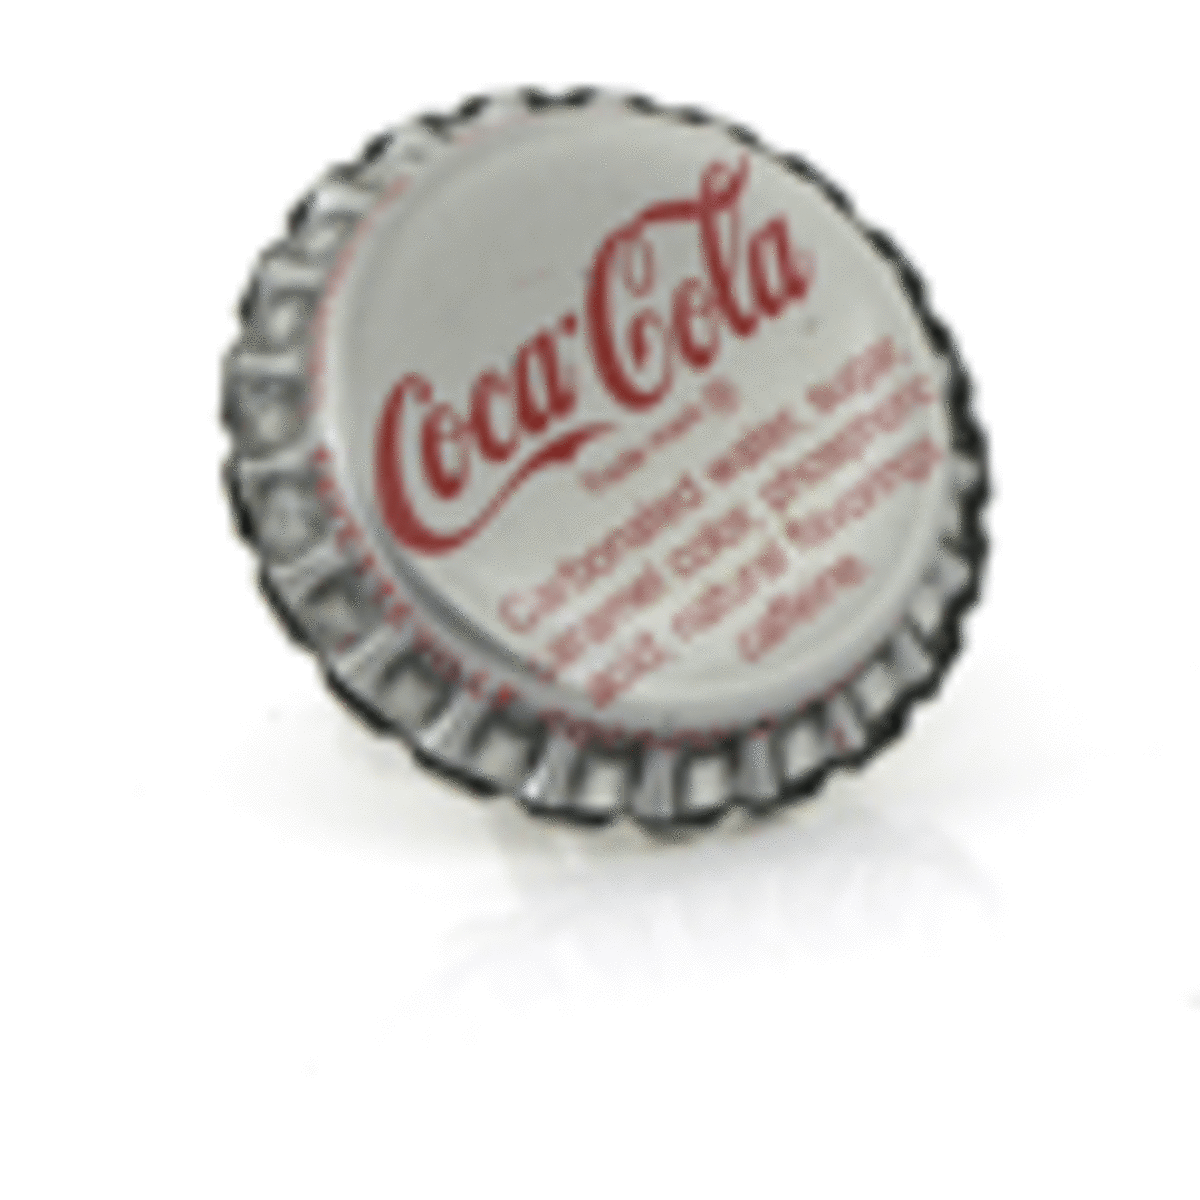 coca cola whimsical bottle cap cuff link